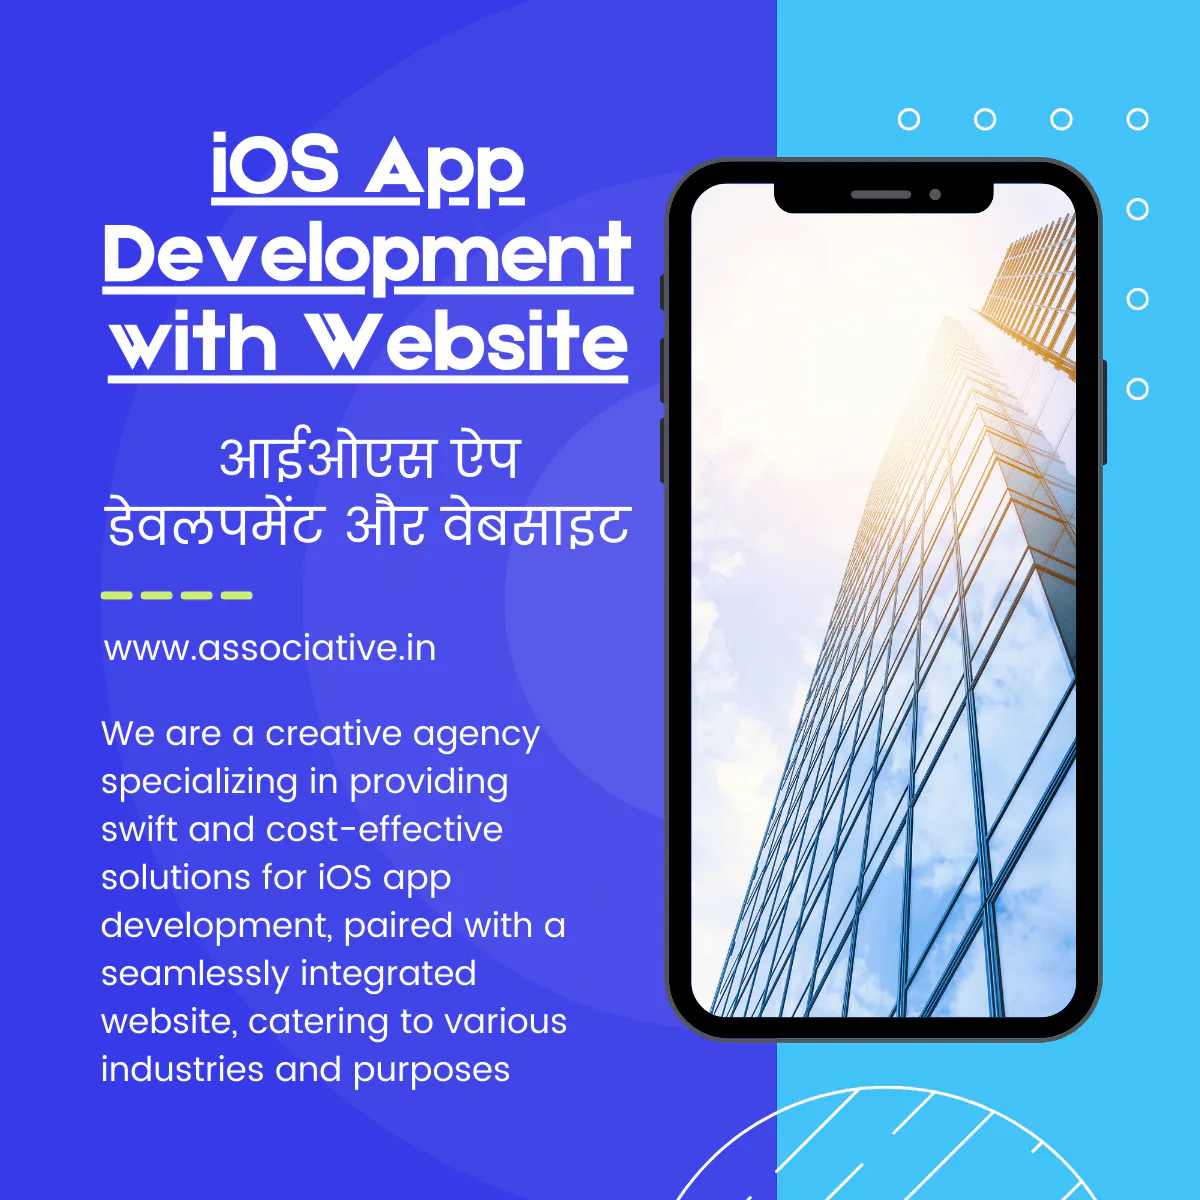 iOS App Development Services in India